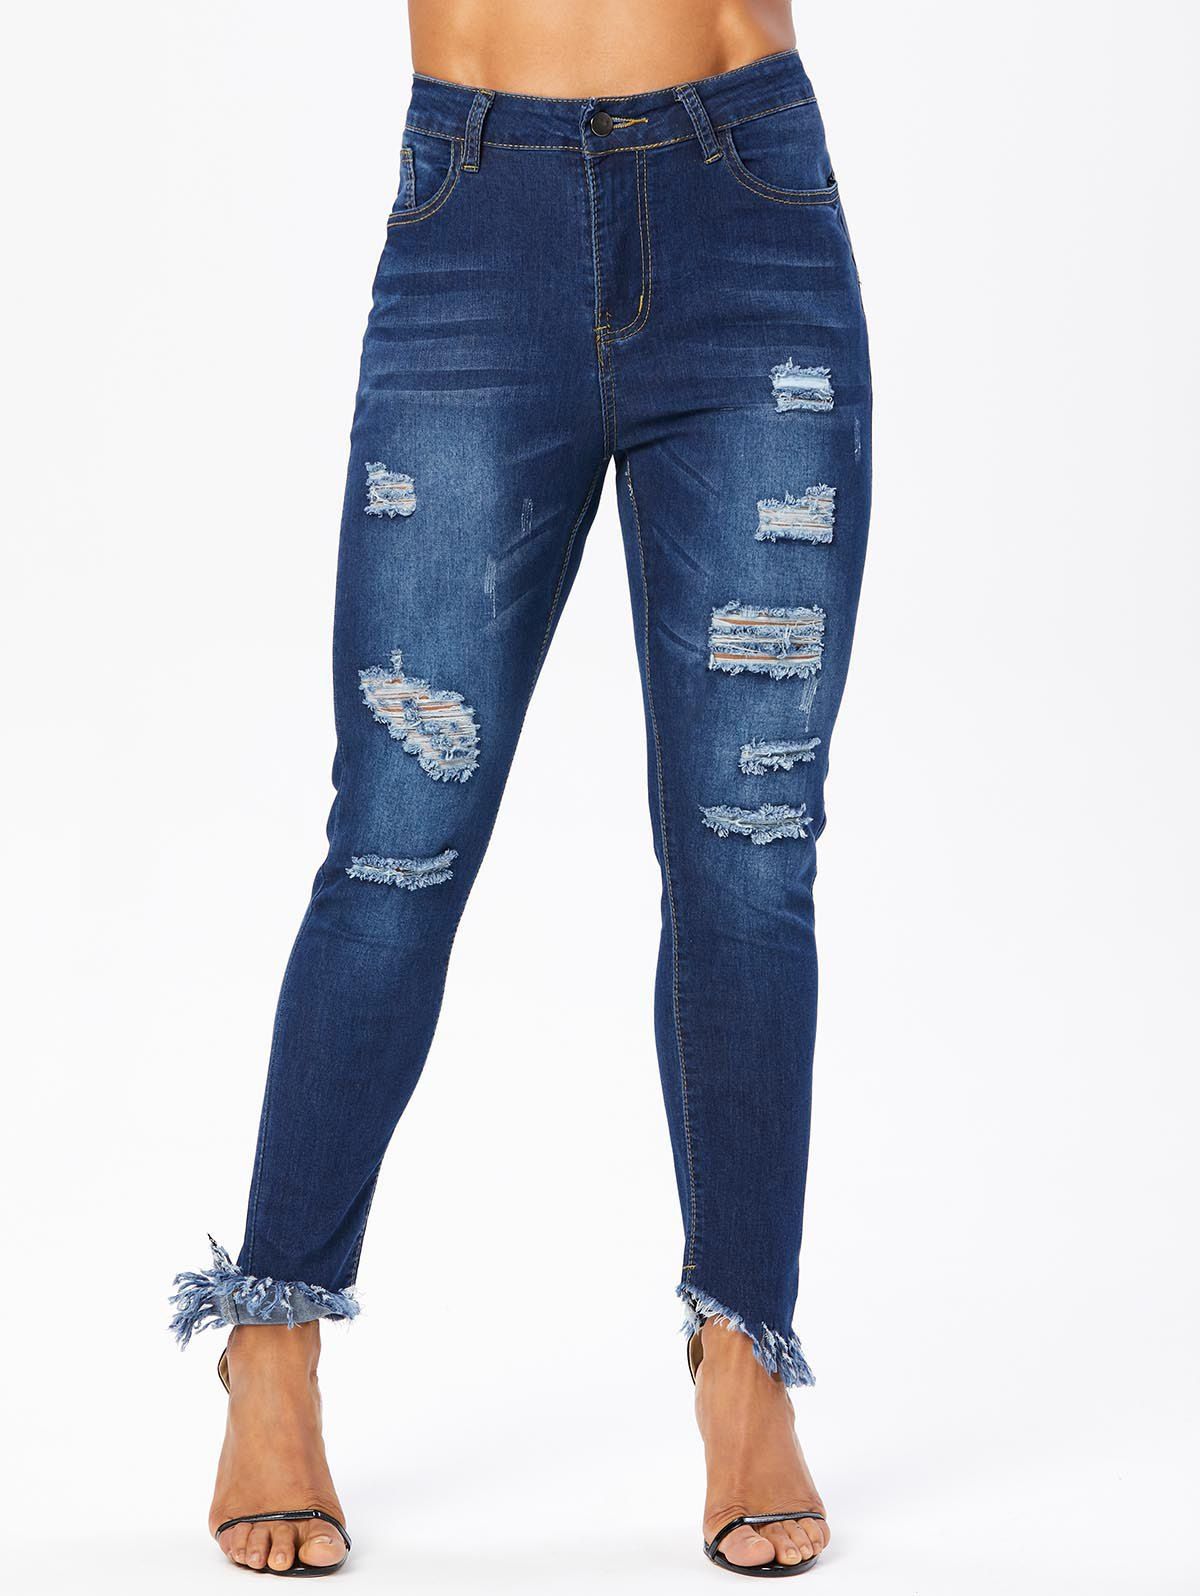 Ripped Jeans Frayed Pockets Zipper Fly Asymmetric Hem Deep Wash Long Skinny Denim Pants 